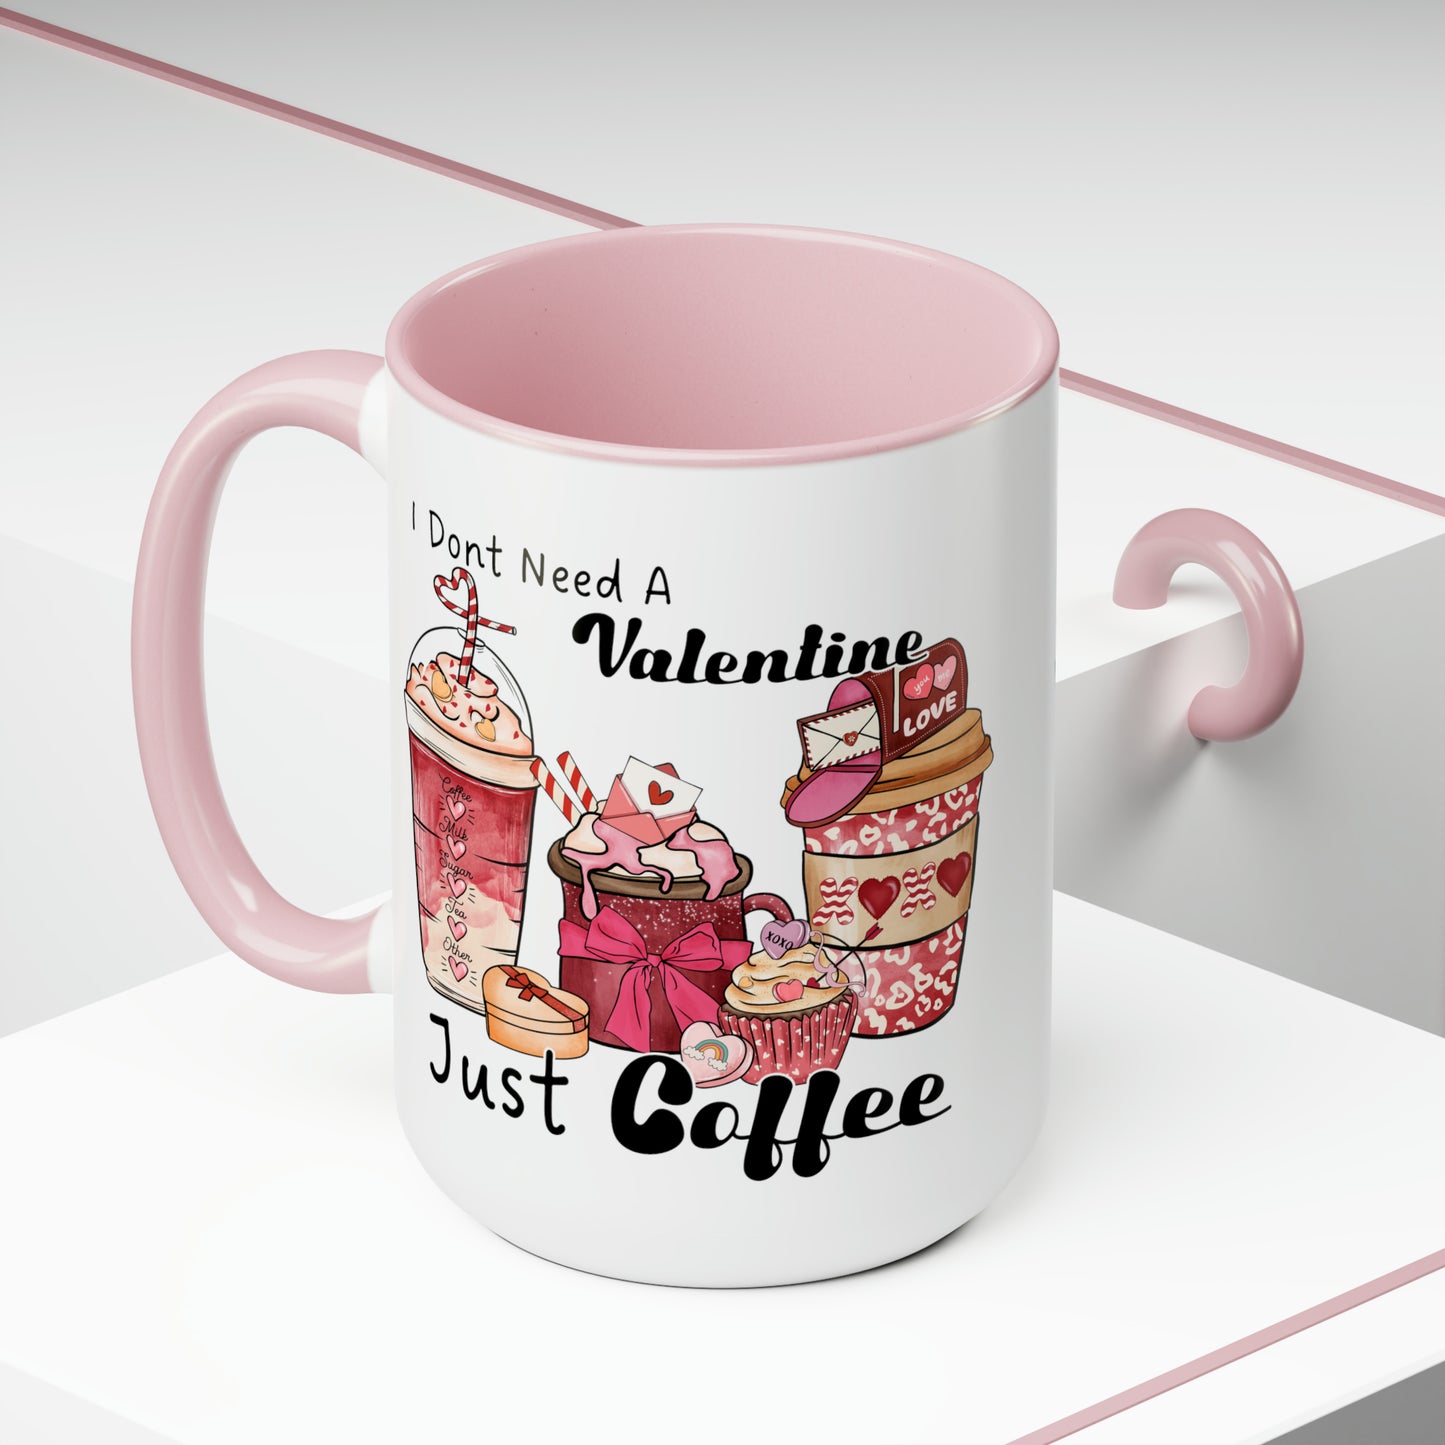 Just Need Coffee Two-Tone Coffee Mug, 15oz Printify Pikolelie (pee-koh-lay-lee) Activewear Mug